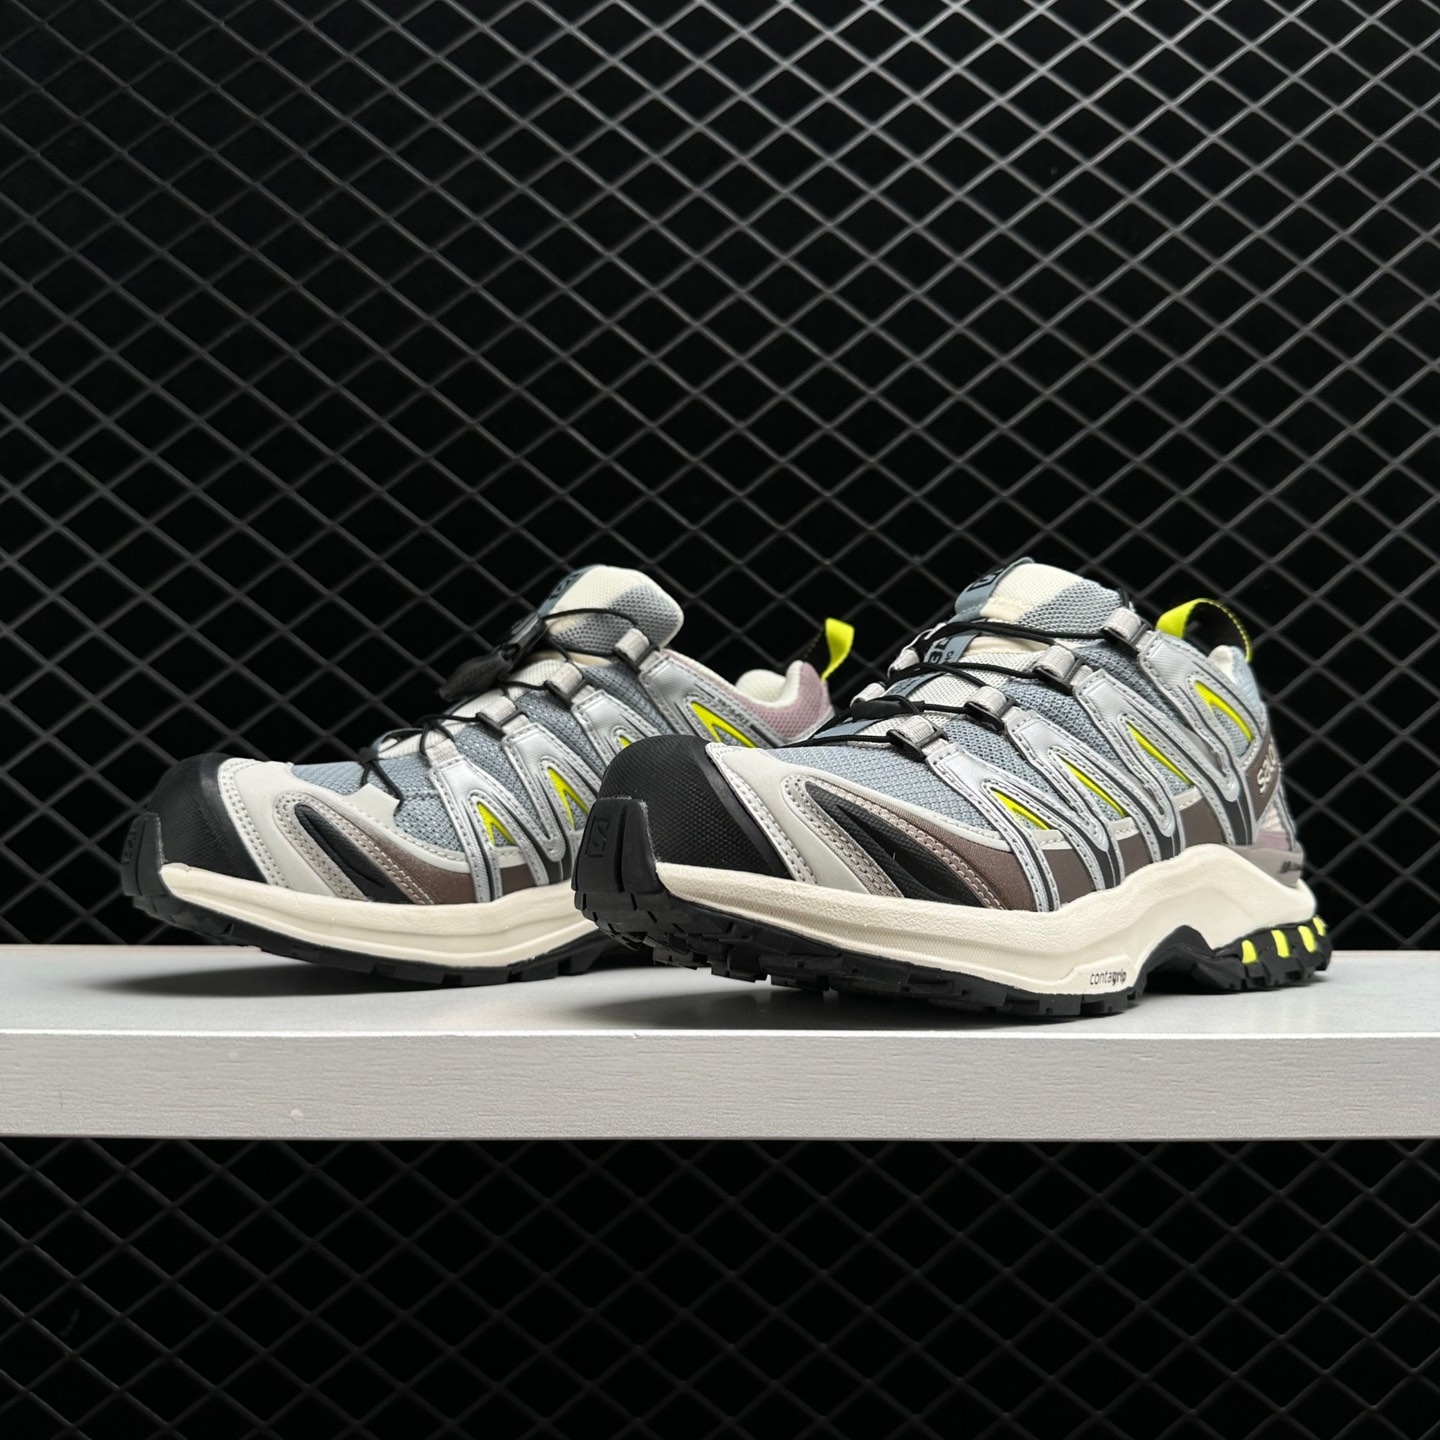 Salomon XA Pro 3D Quarry Lime Punch | L41232200 - Durable Trail Running Shoe